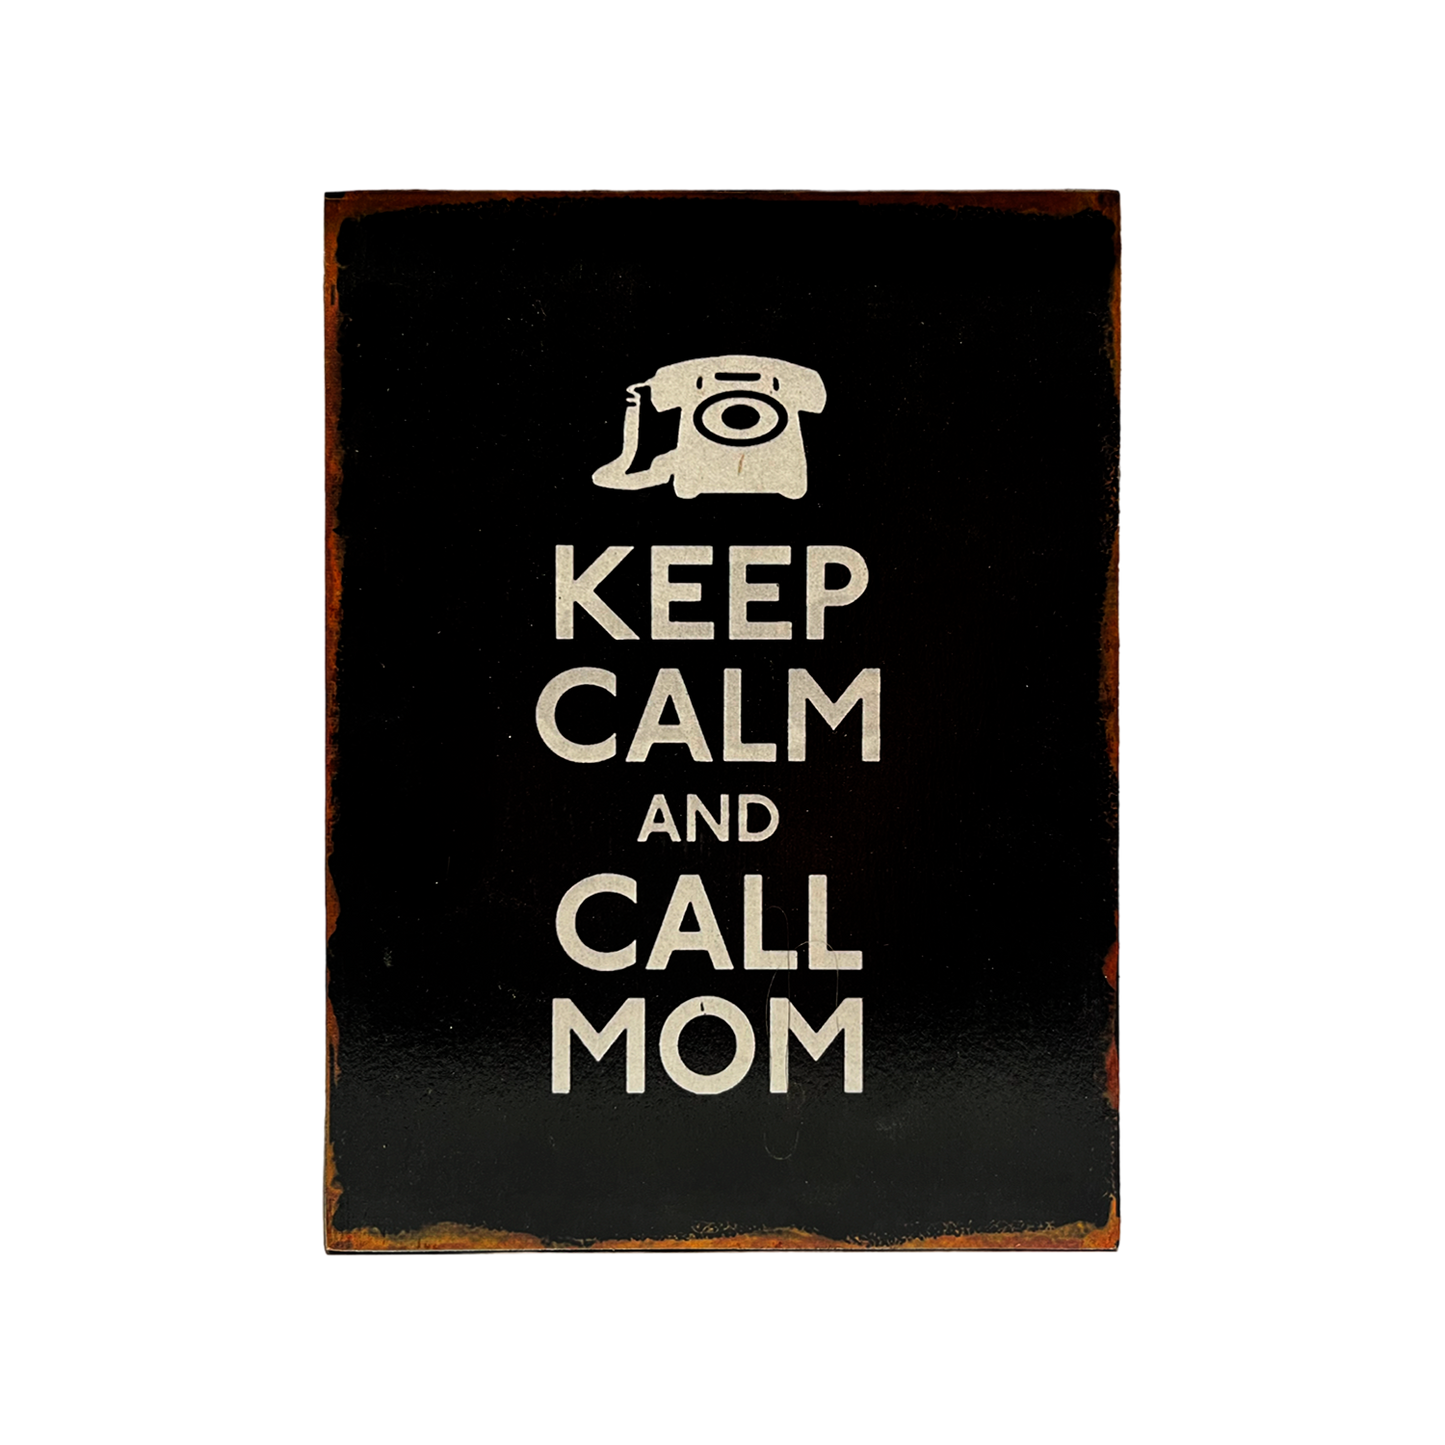 Afiche "Keep calm and call mom"